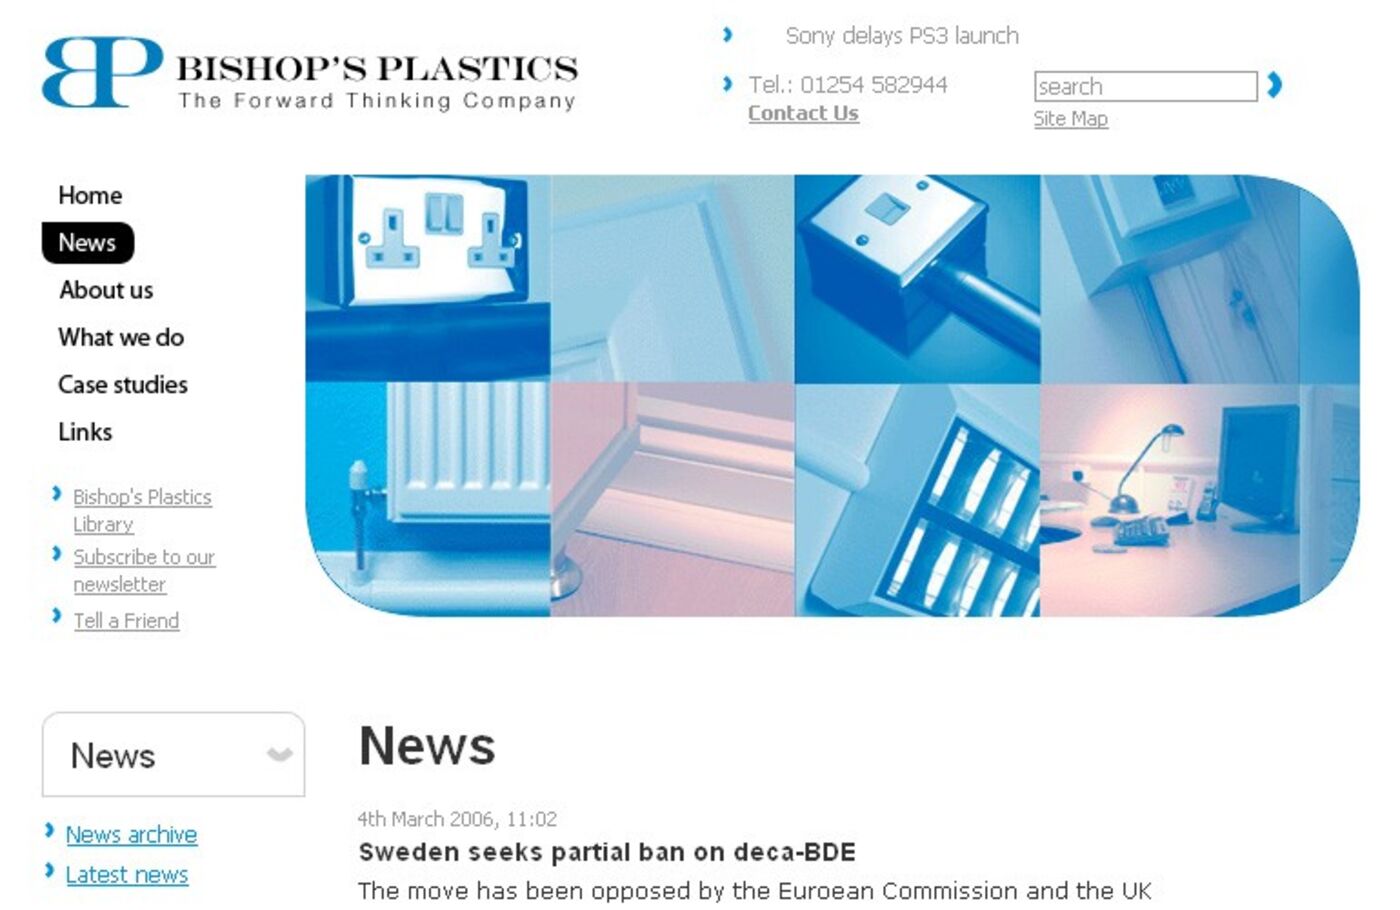 Bishop's Plastics News